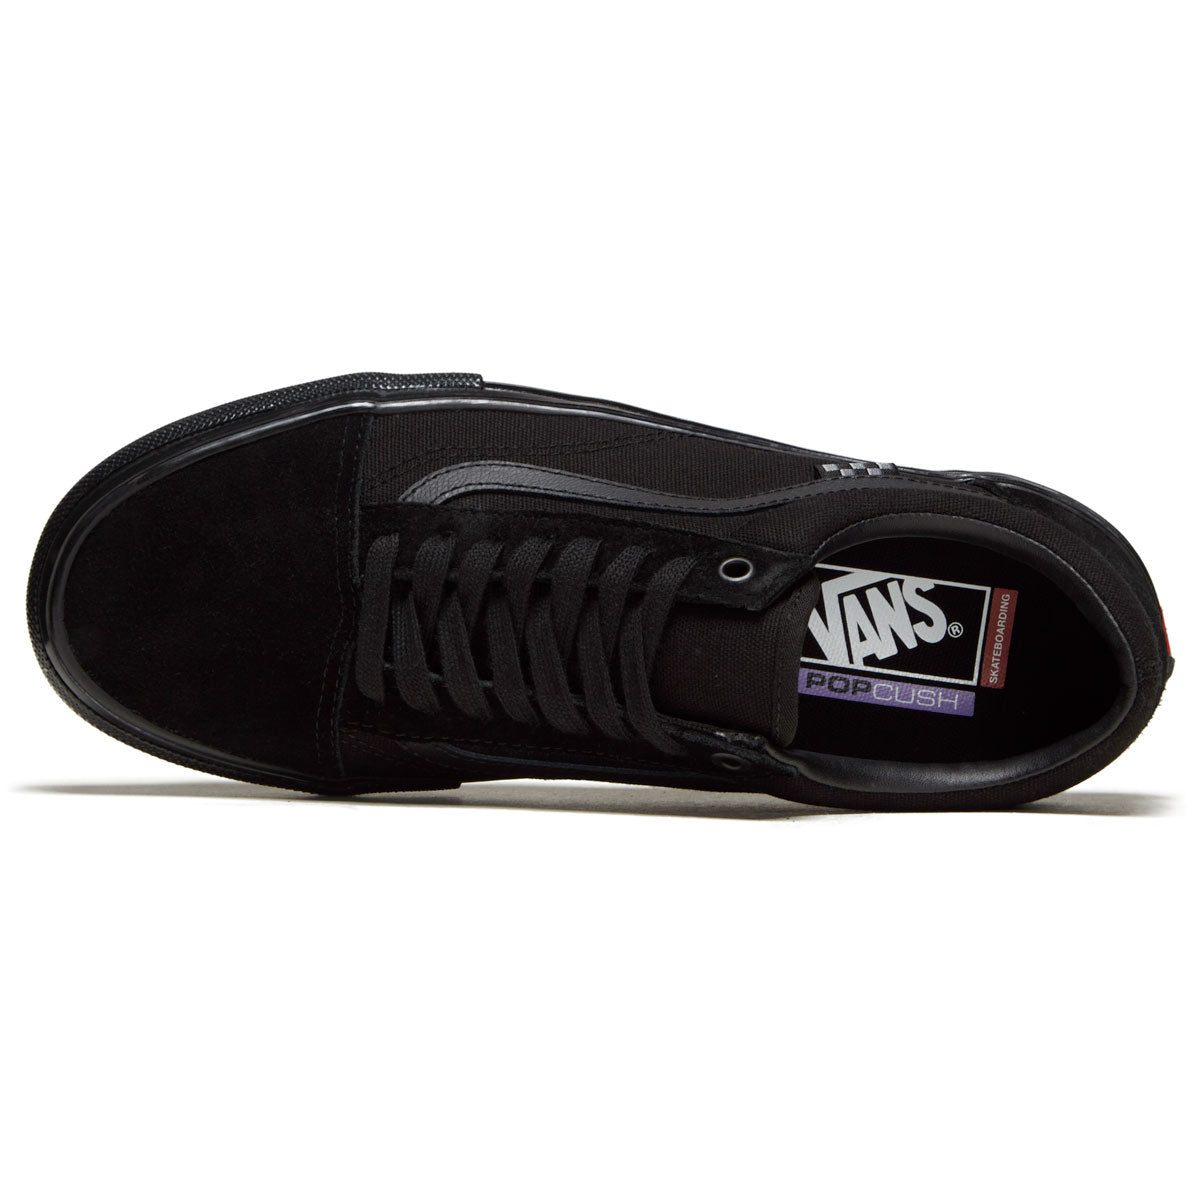 Vans Skate Old Skool Shoes - Black/Black image 3